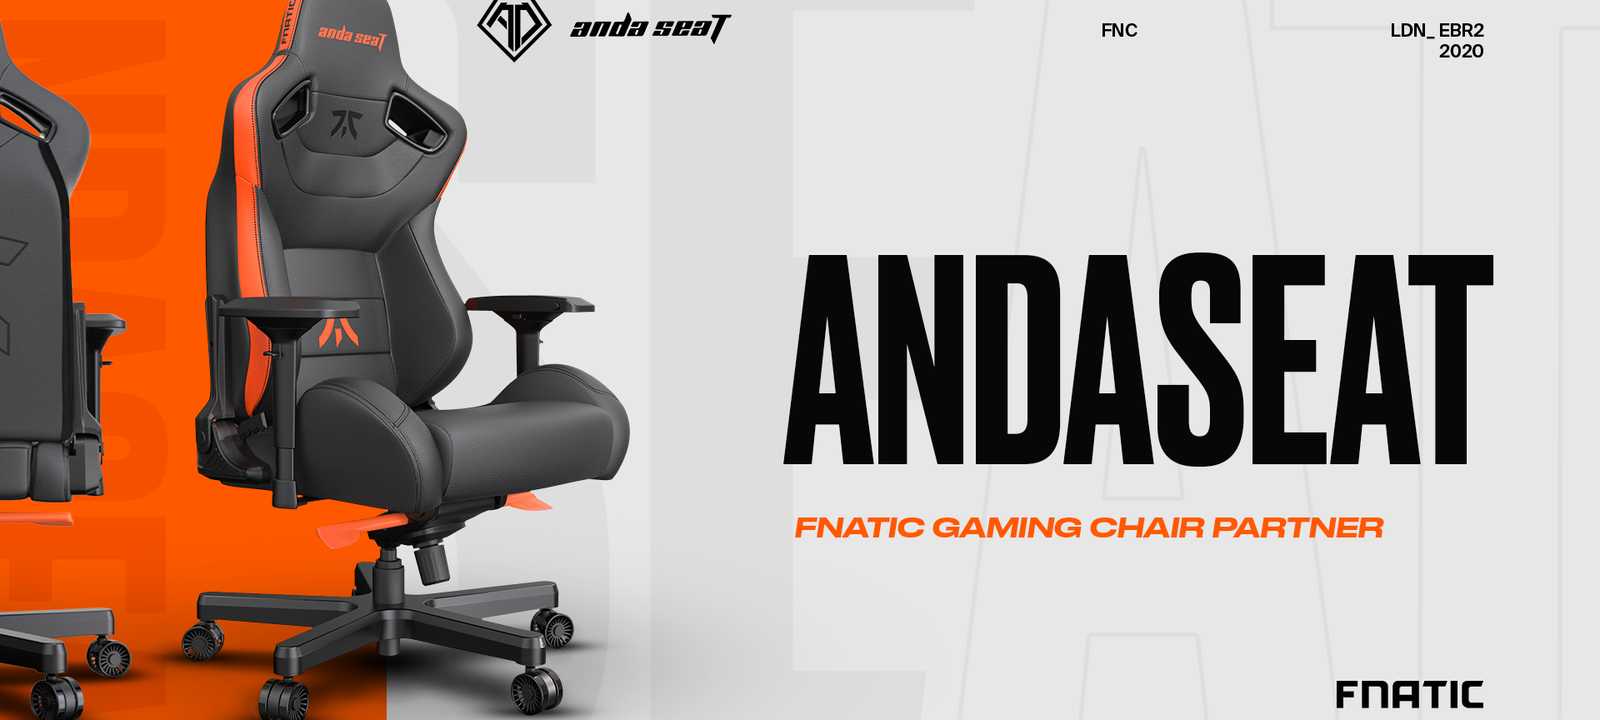 Anda seat with Fnatic branding